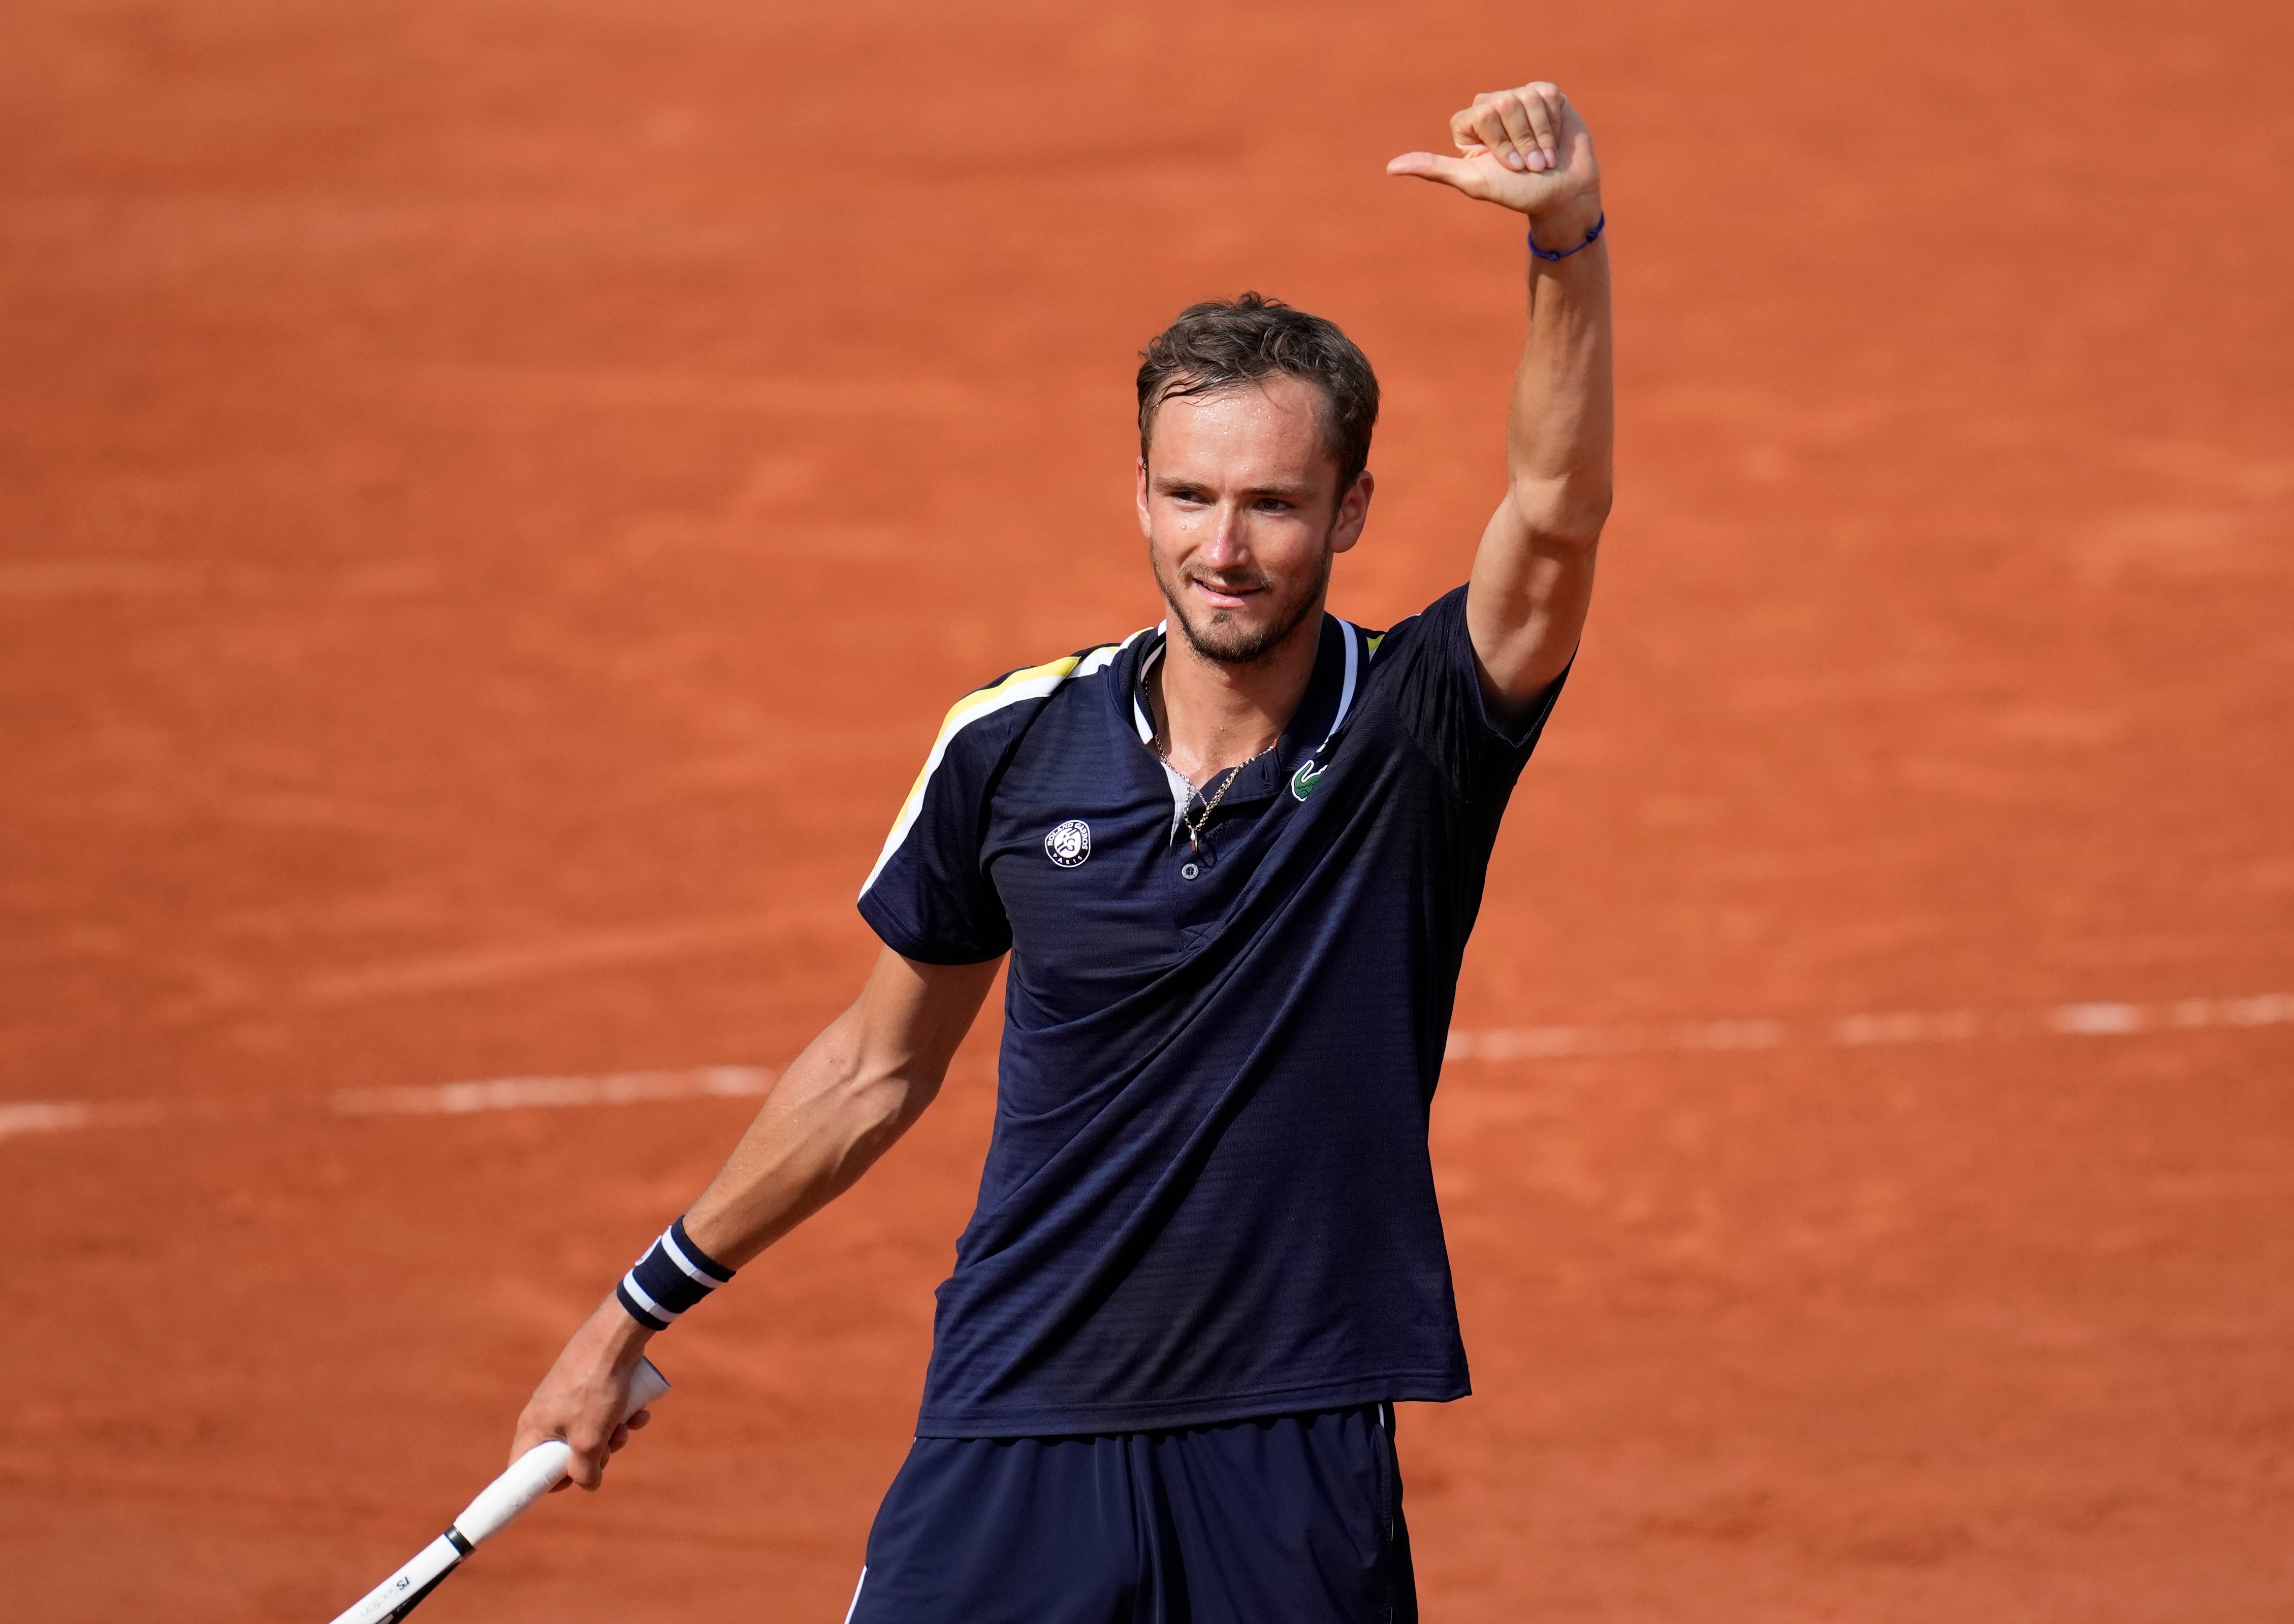 Daniil Medvedev continued his surprise run at Roland Garros